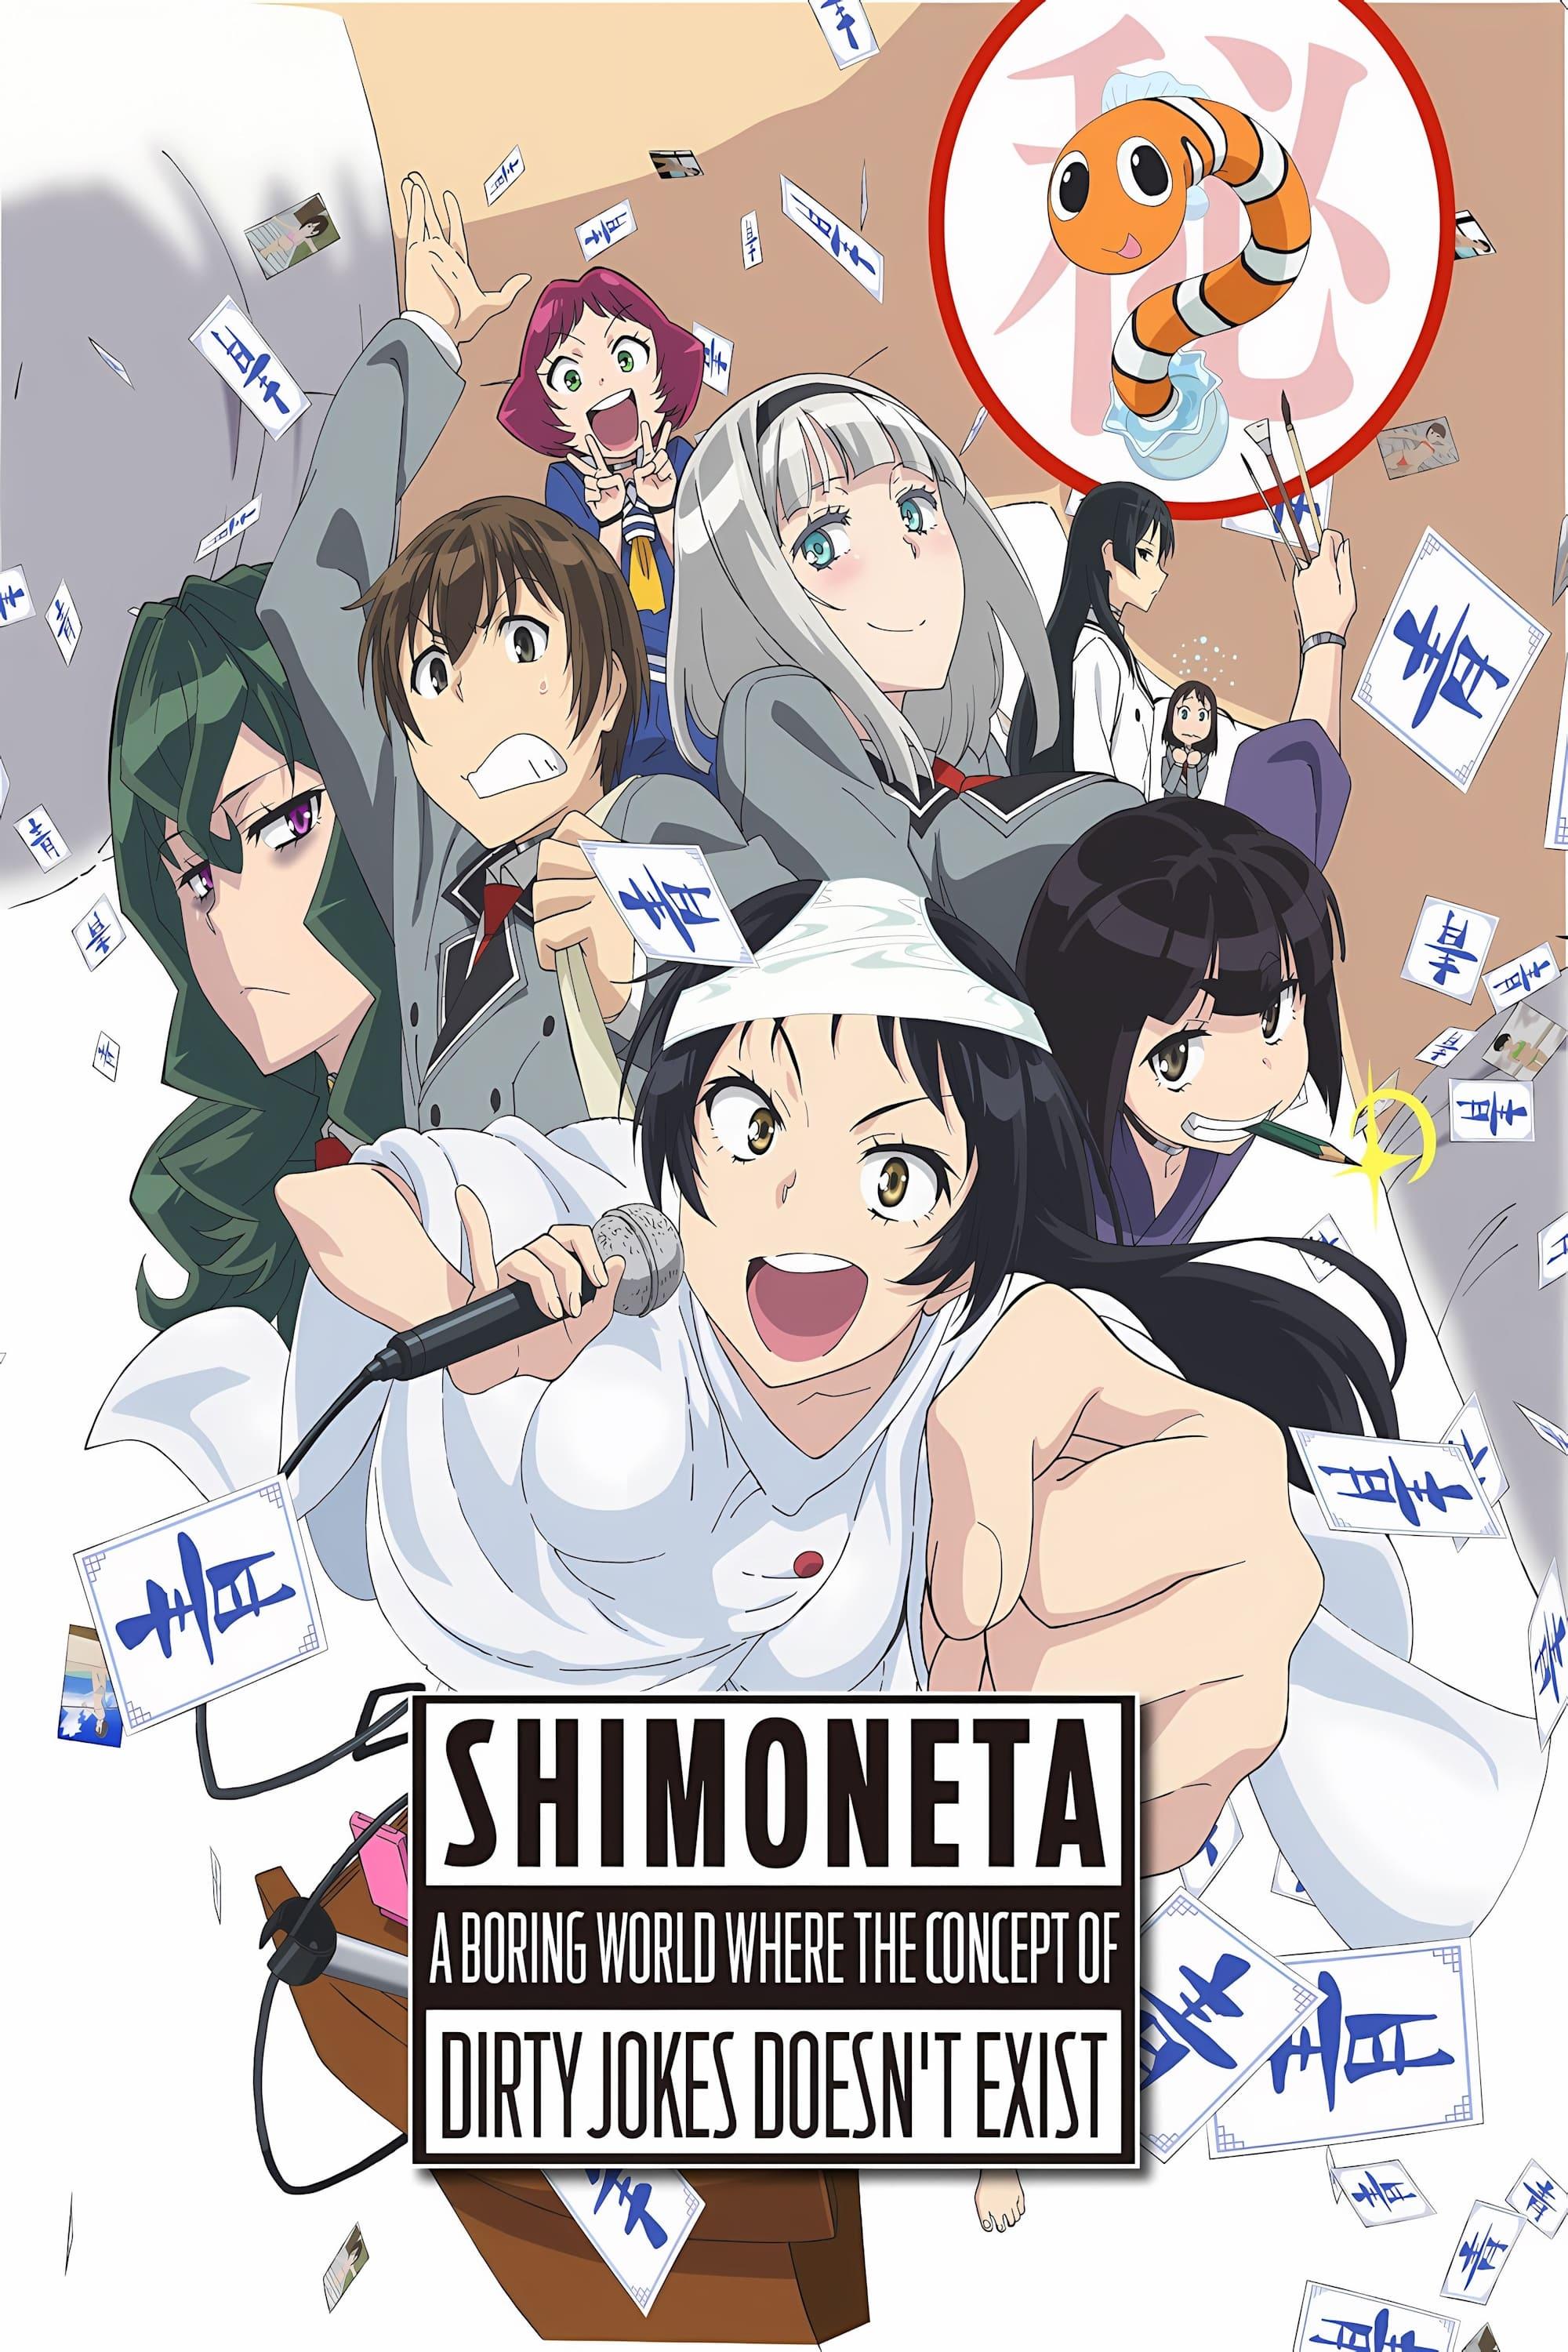 SHIMONETA: A Boring World Where the Concept of Dirty Jokes Doesn't Exist poster